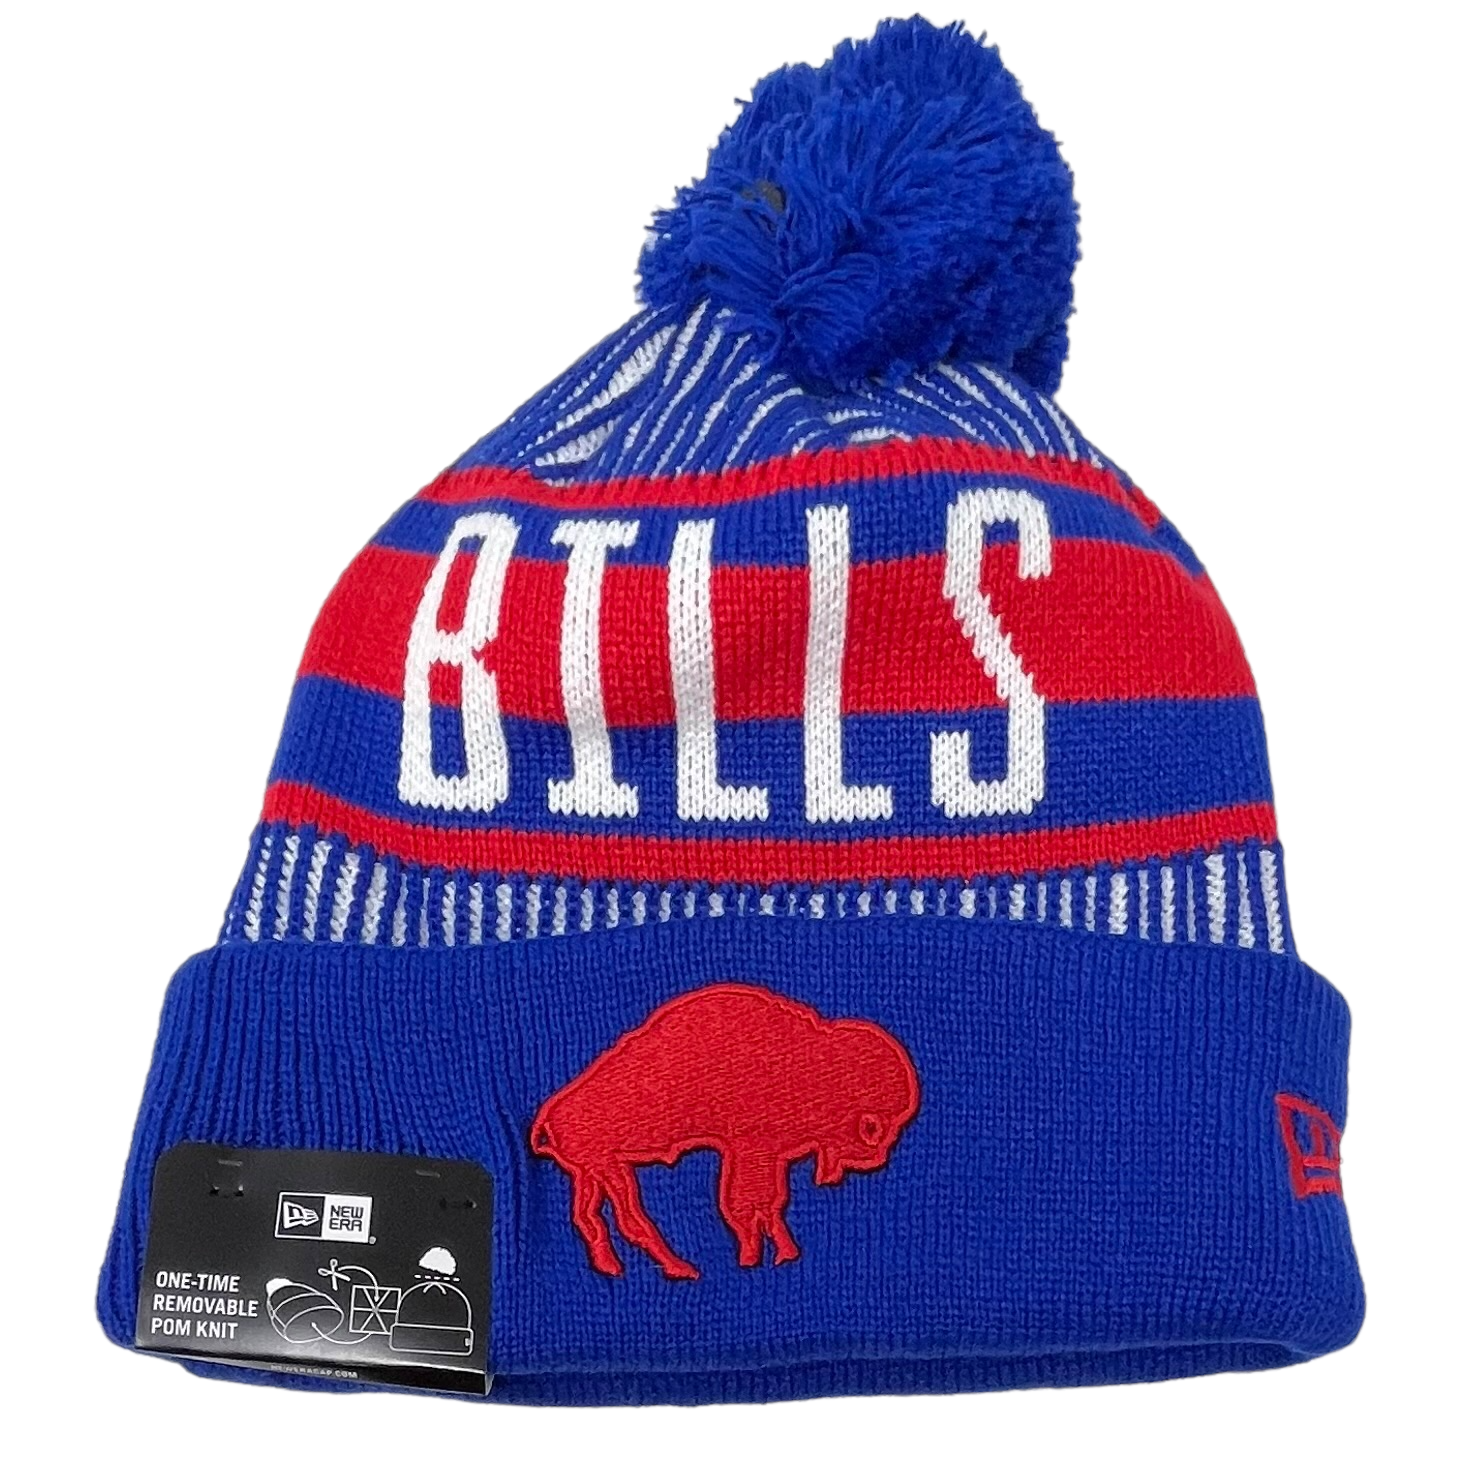 buffalo bills knitted hat